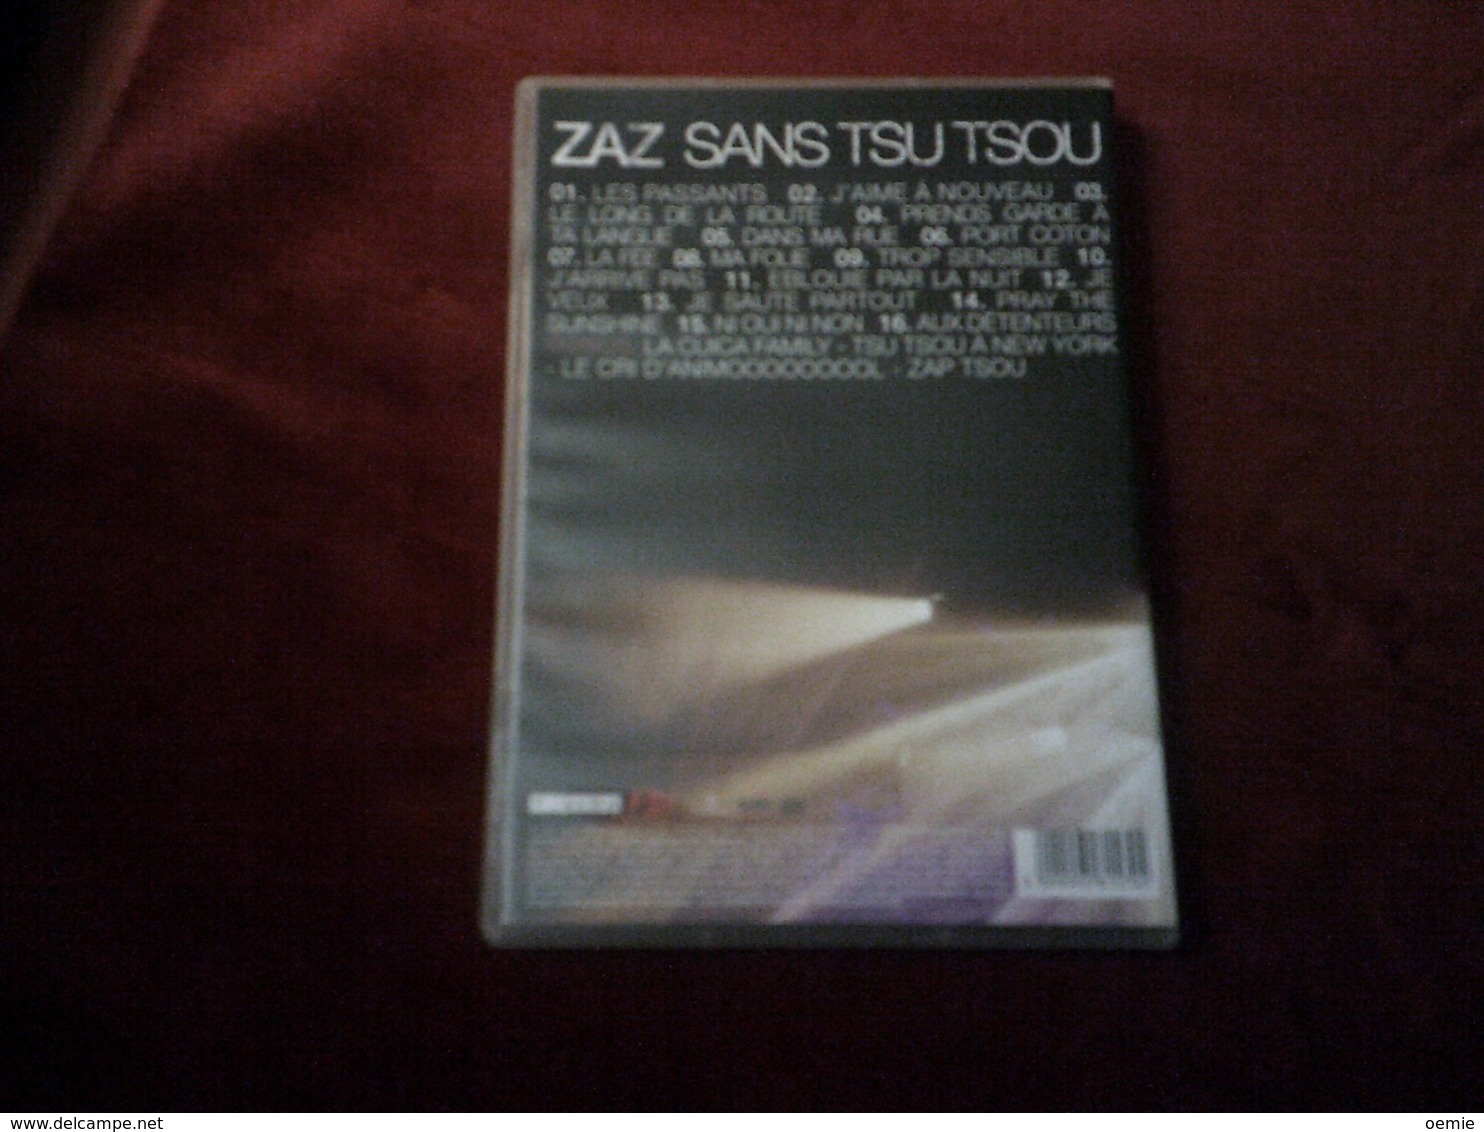 ZAZ ° SANS TSU  TSOU   °° DVD 16 TITRES + BONUS - Concert Et Musique